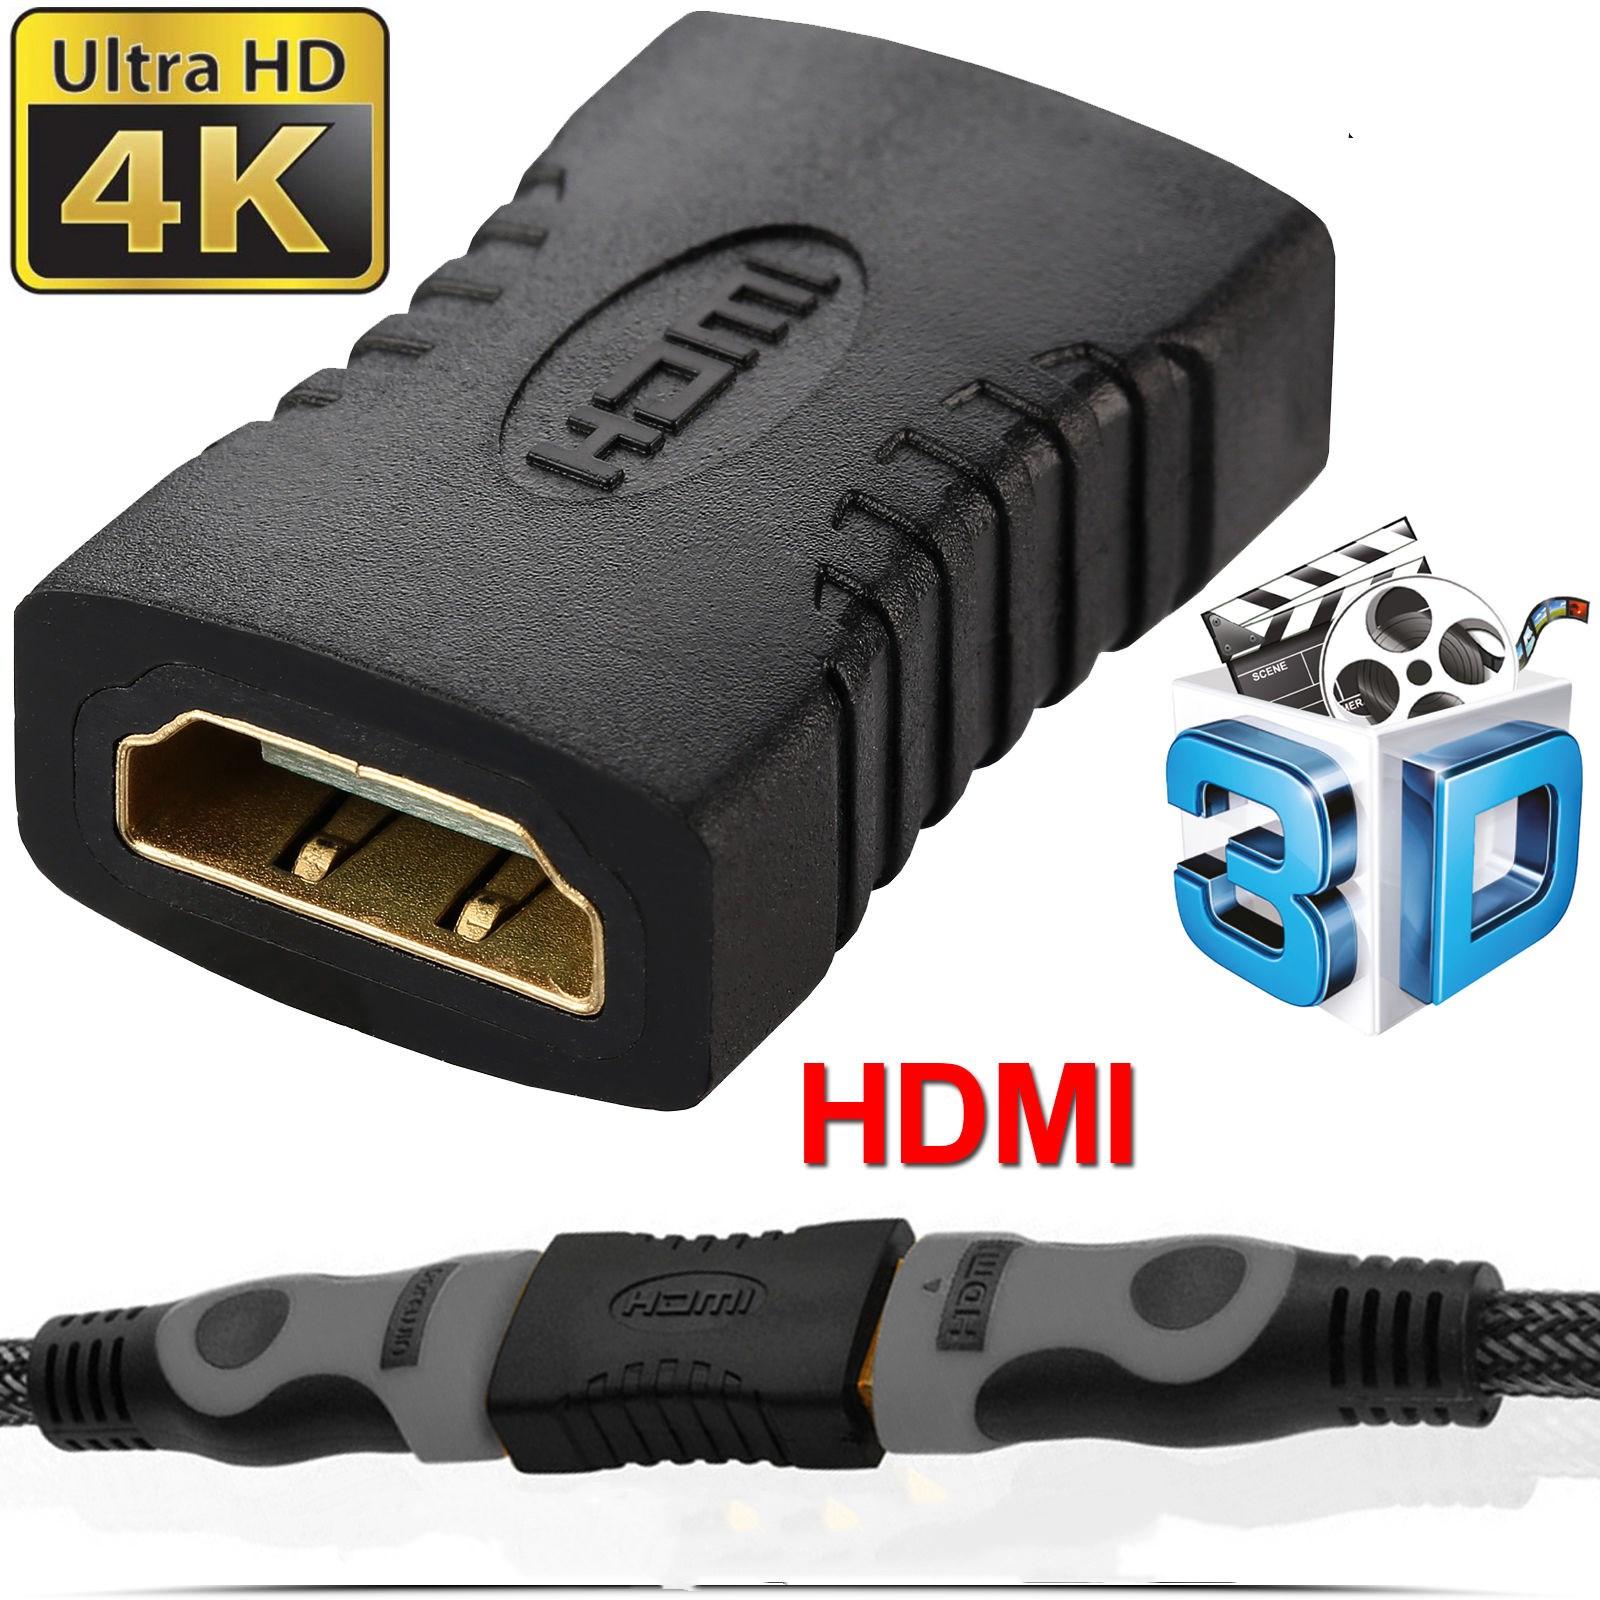 HDMI EXTENDER FEMALE TO FEMALE COUPLER ADAPTER JOINER CONNECTOR for 1080P HDTV